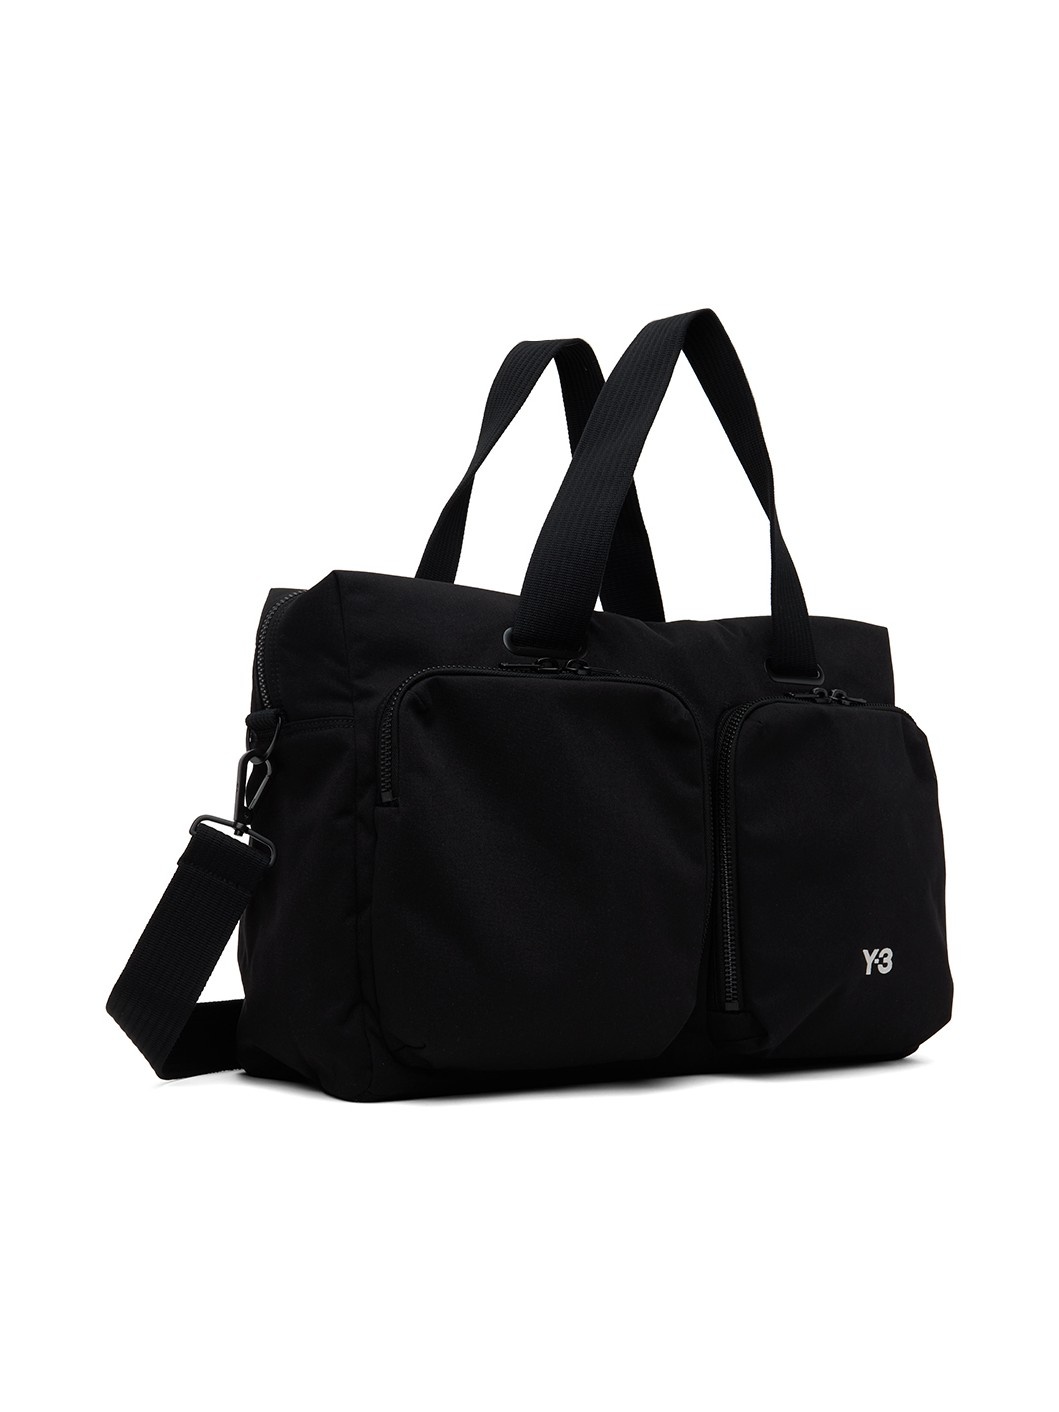 Black Travel Duffle Bag - 2